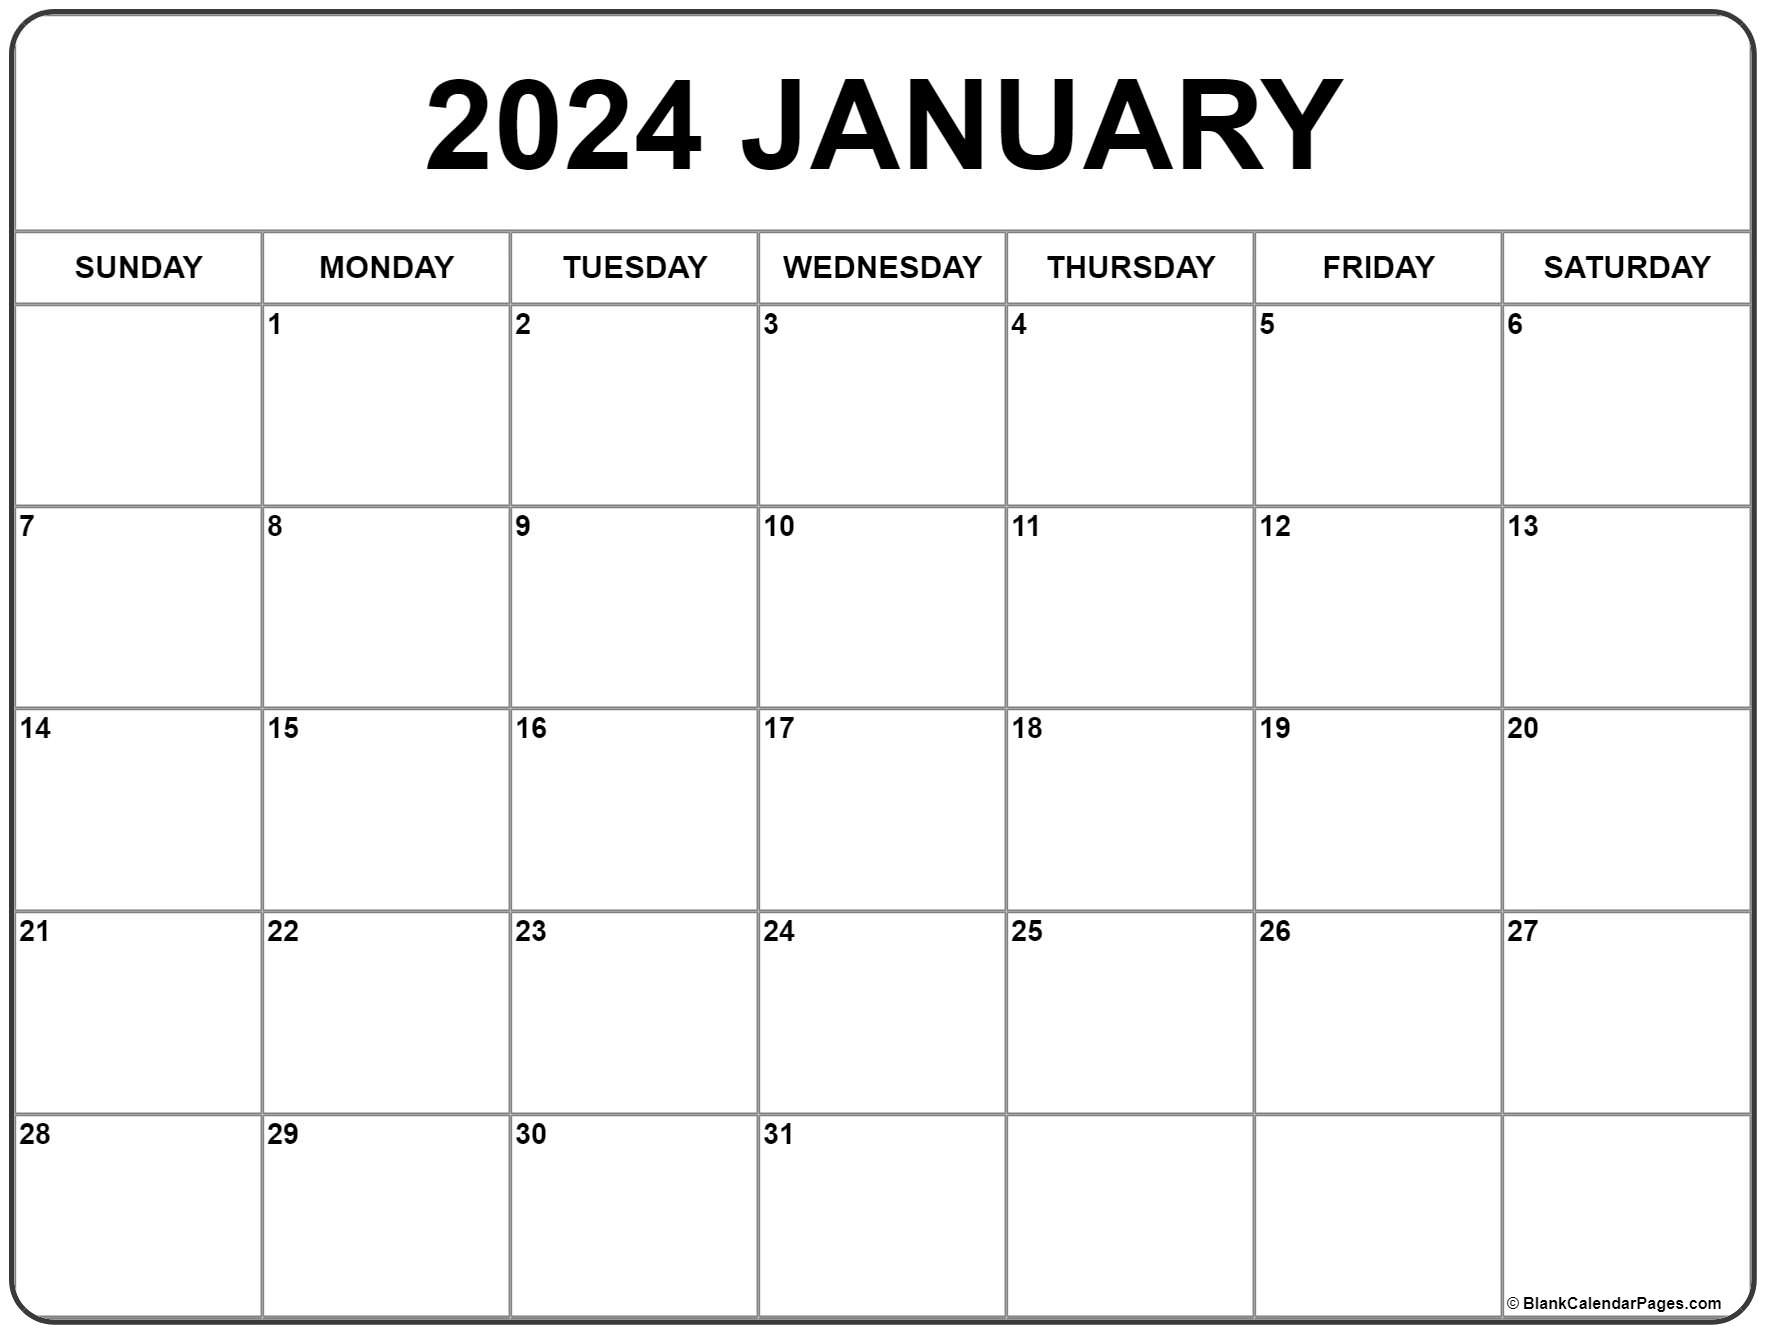 January 2024 Calendar | Free Printable Calendar for Monthly Printable January 2024 Calendar